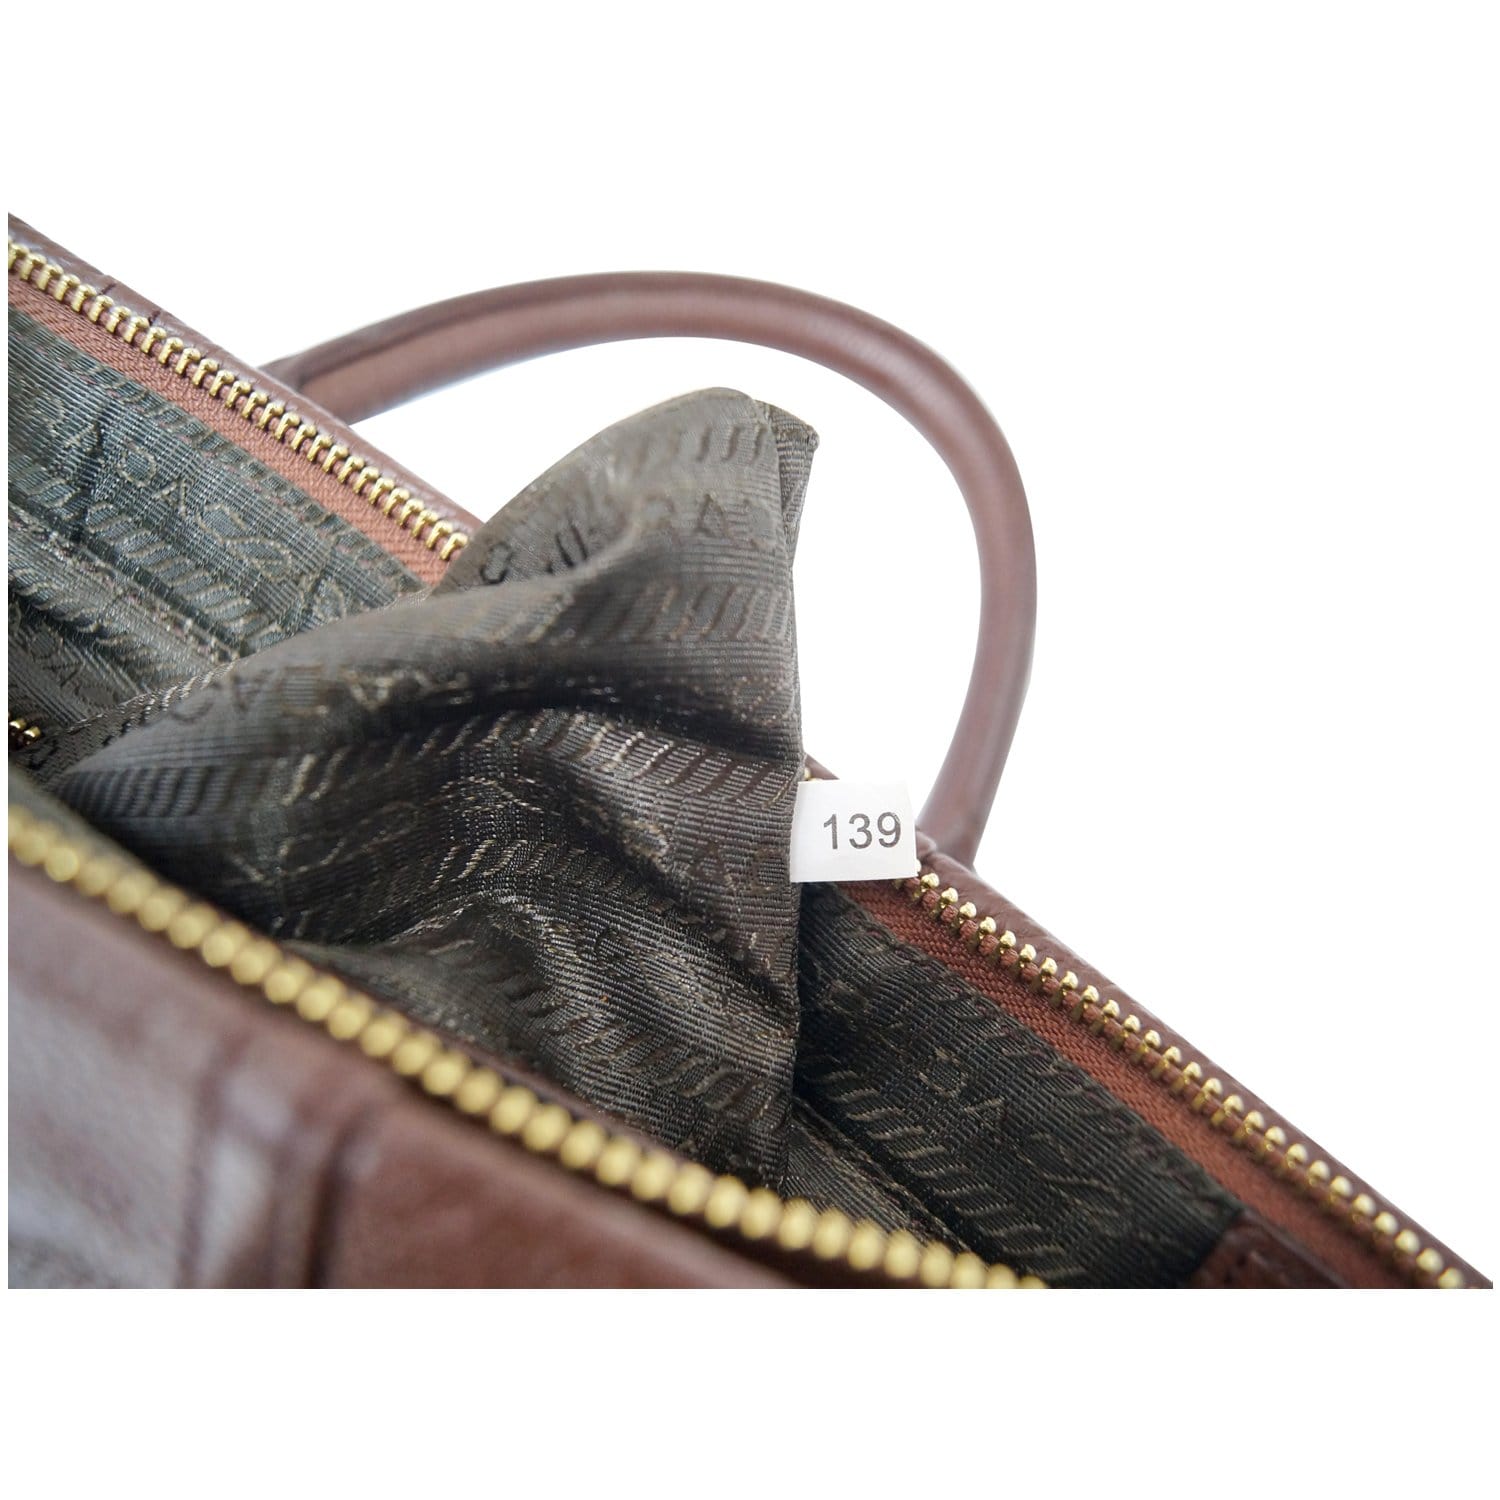 Prada Metallic Silver Cervo Antik Leather Bauletto Bag